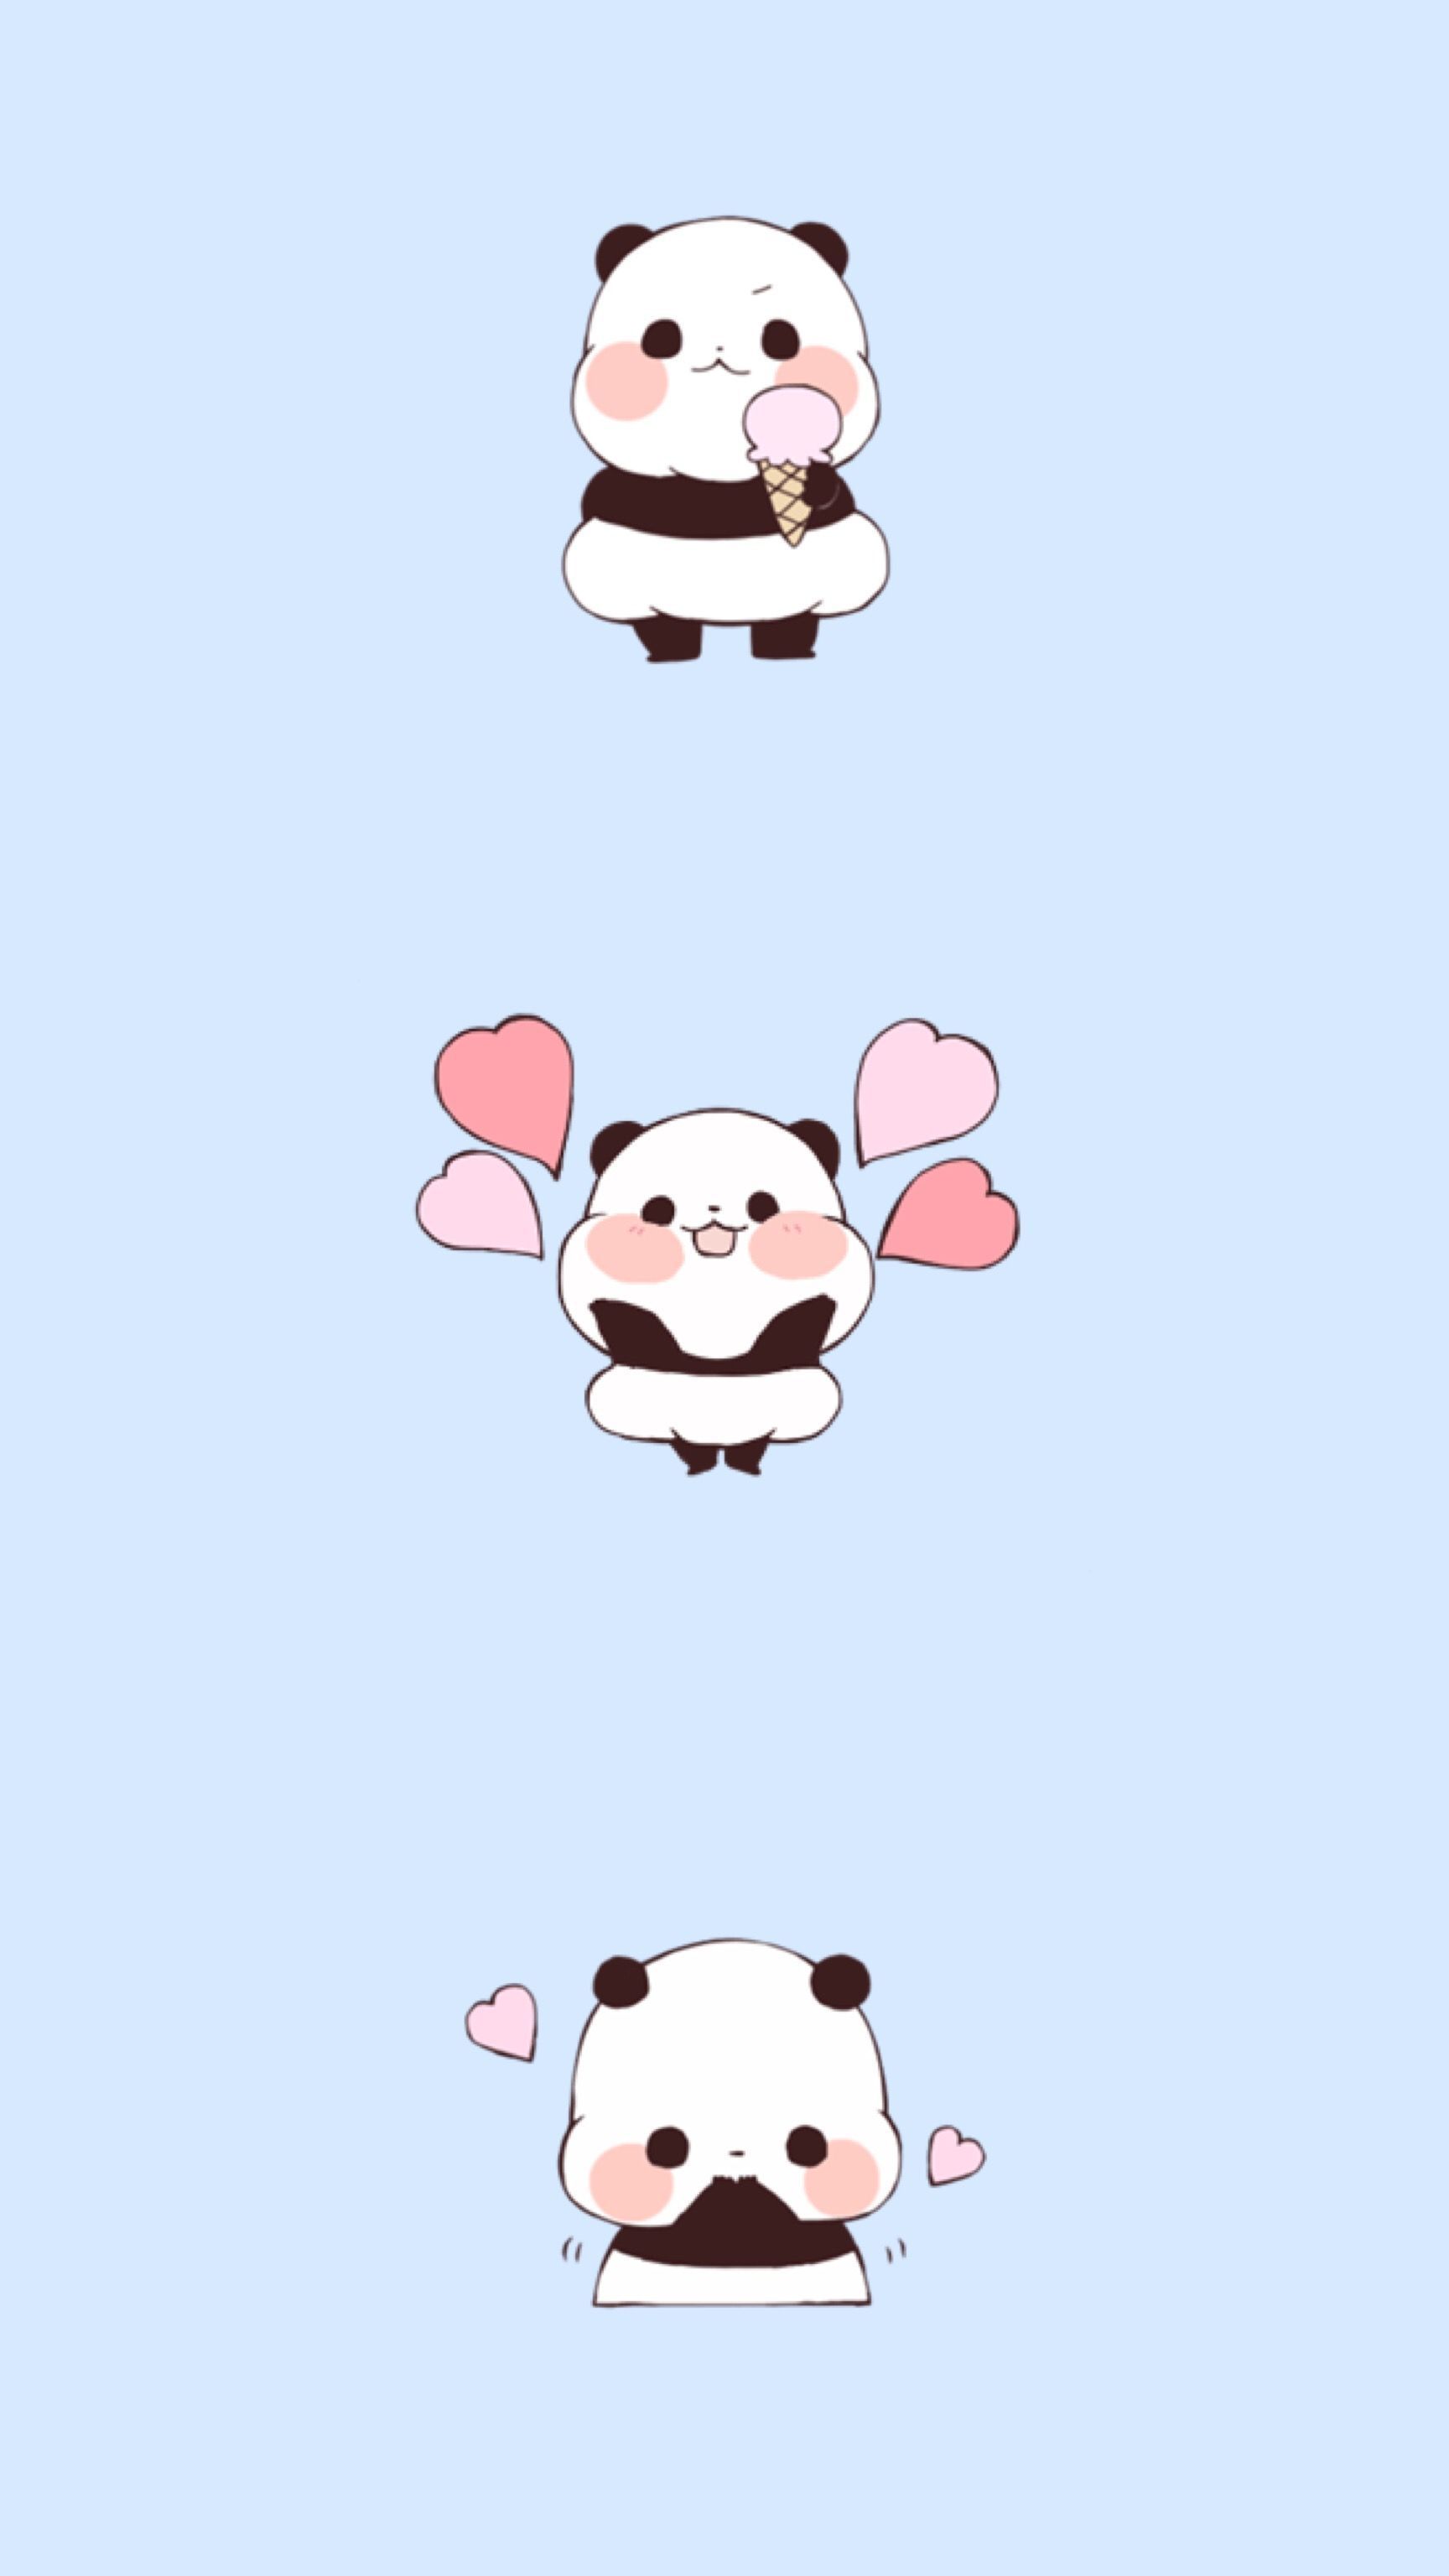 Cute Anime Panda Wallpapers Wallpapers